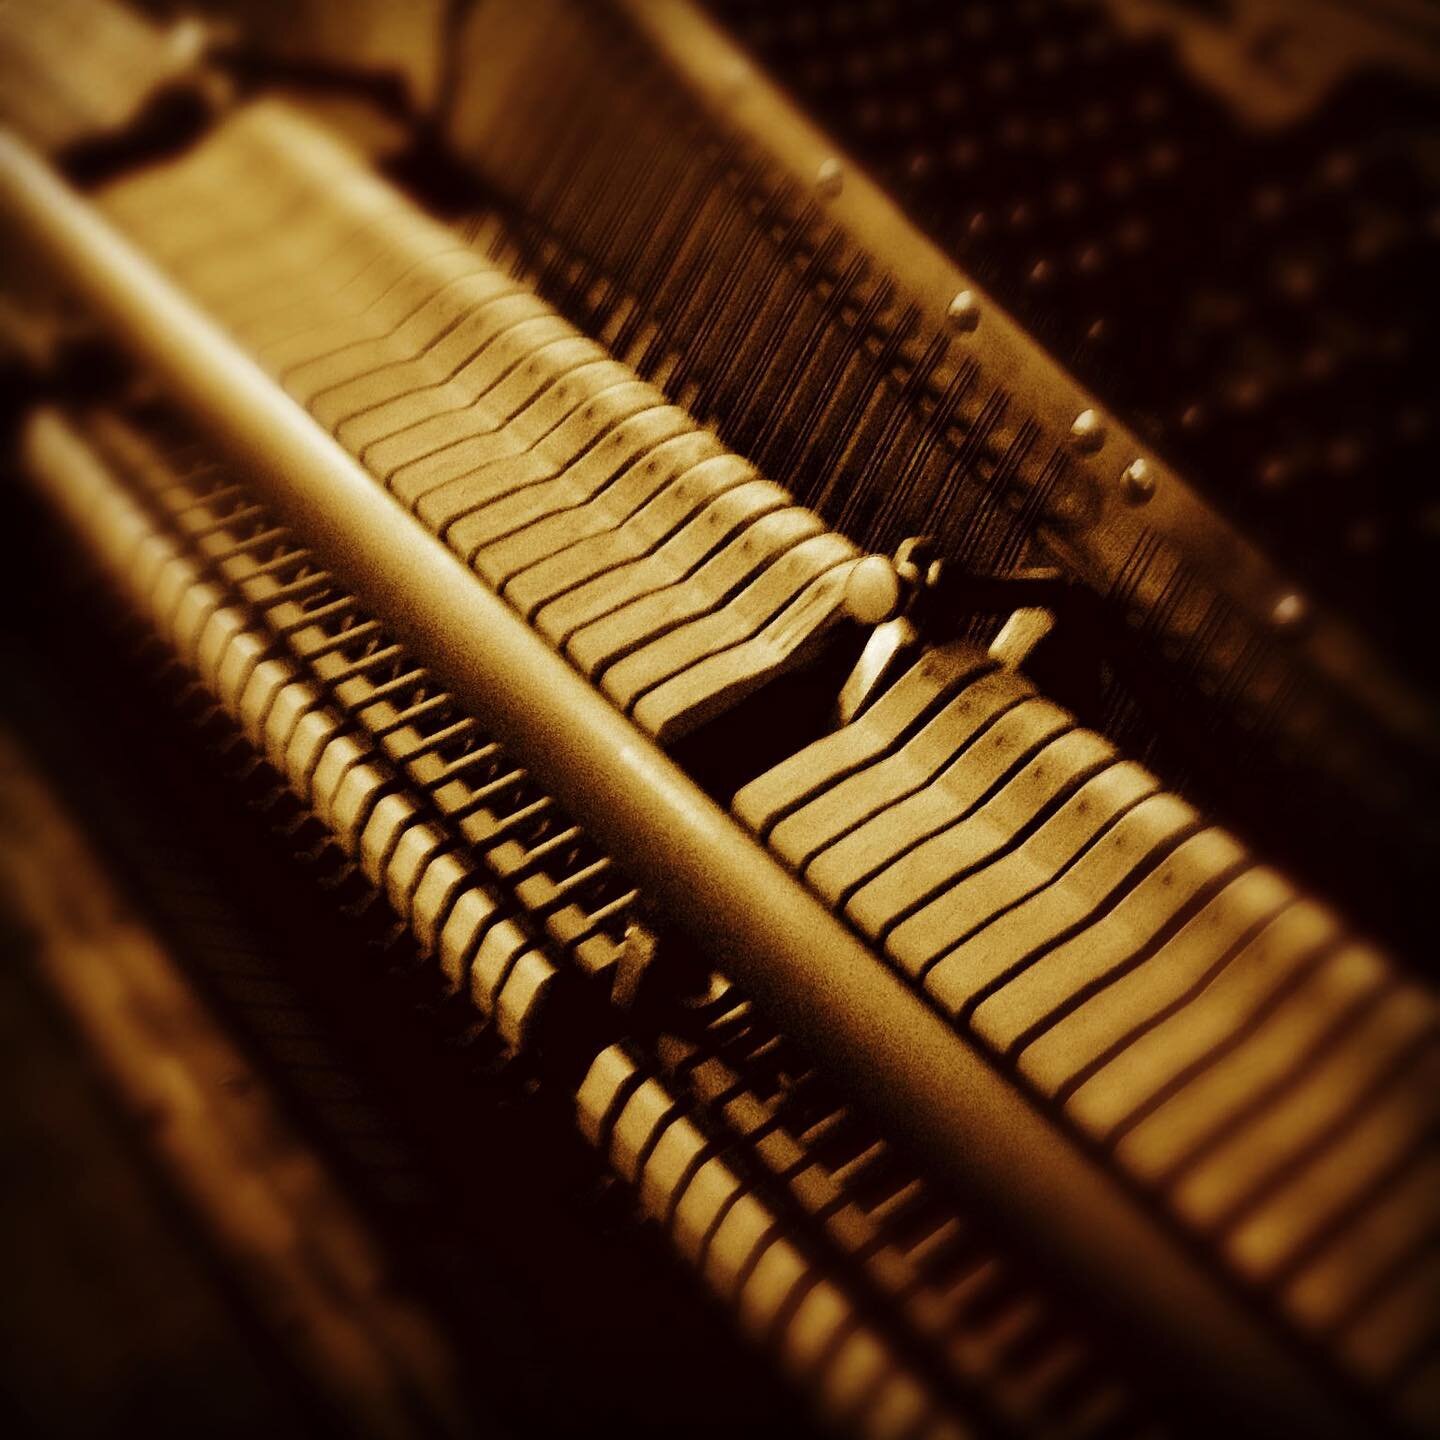 Internal mechanics #piano #pianist #davidvincentmills #firstpostoninstagram #steinway